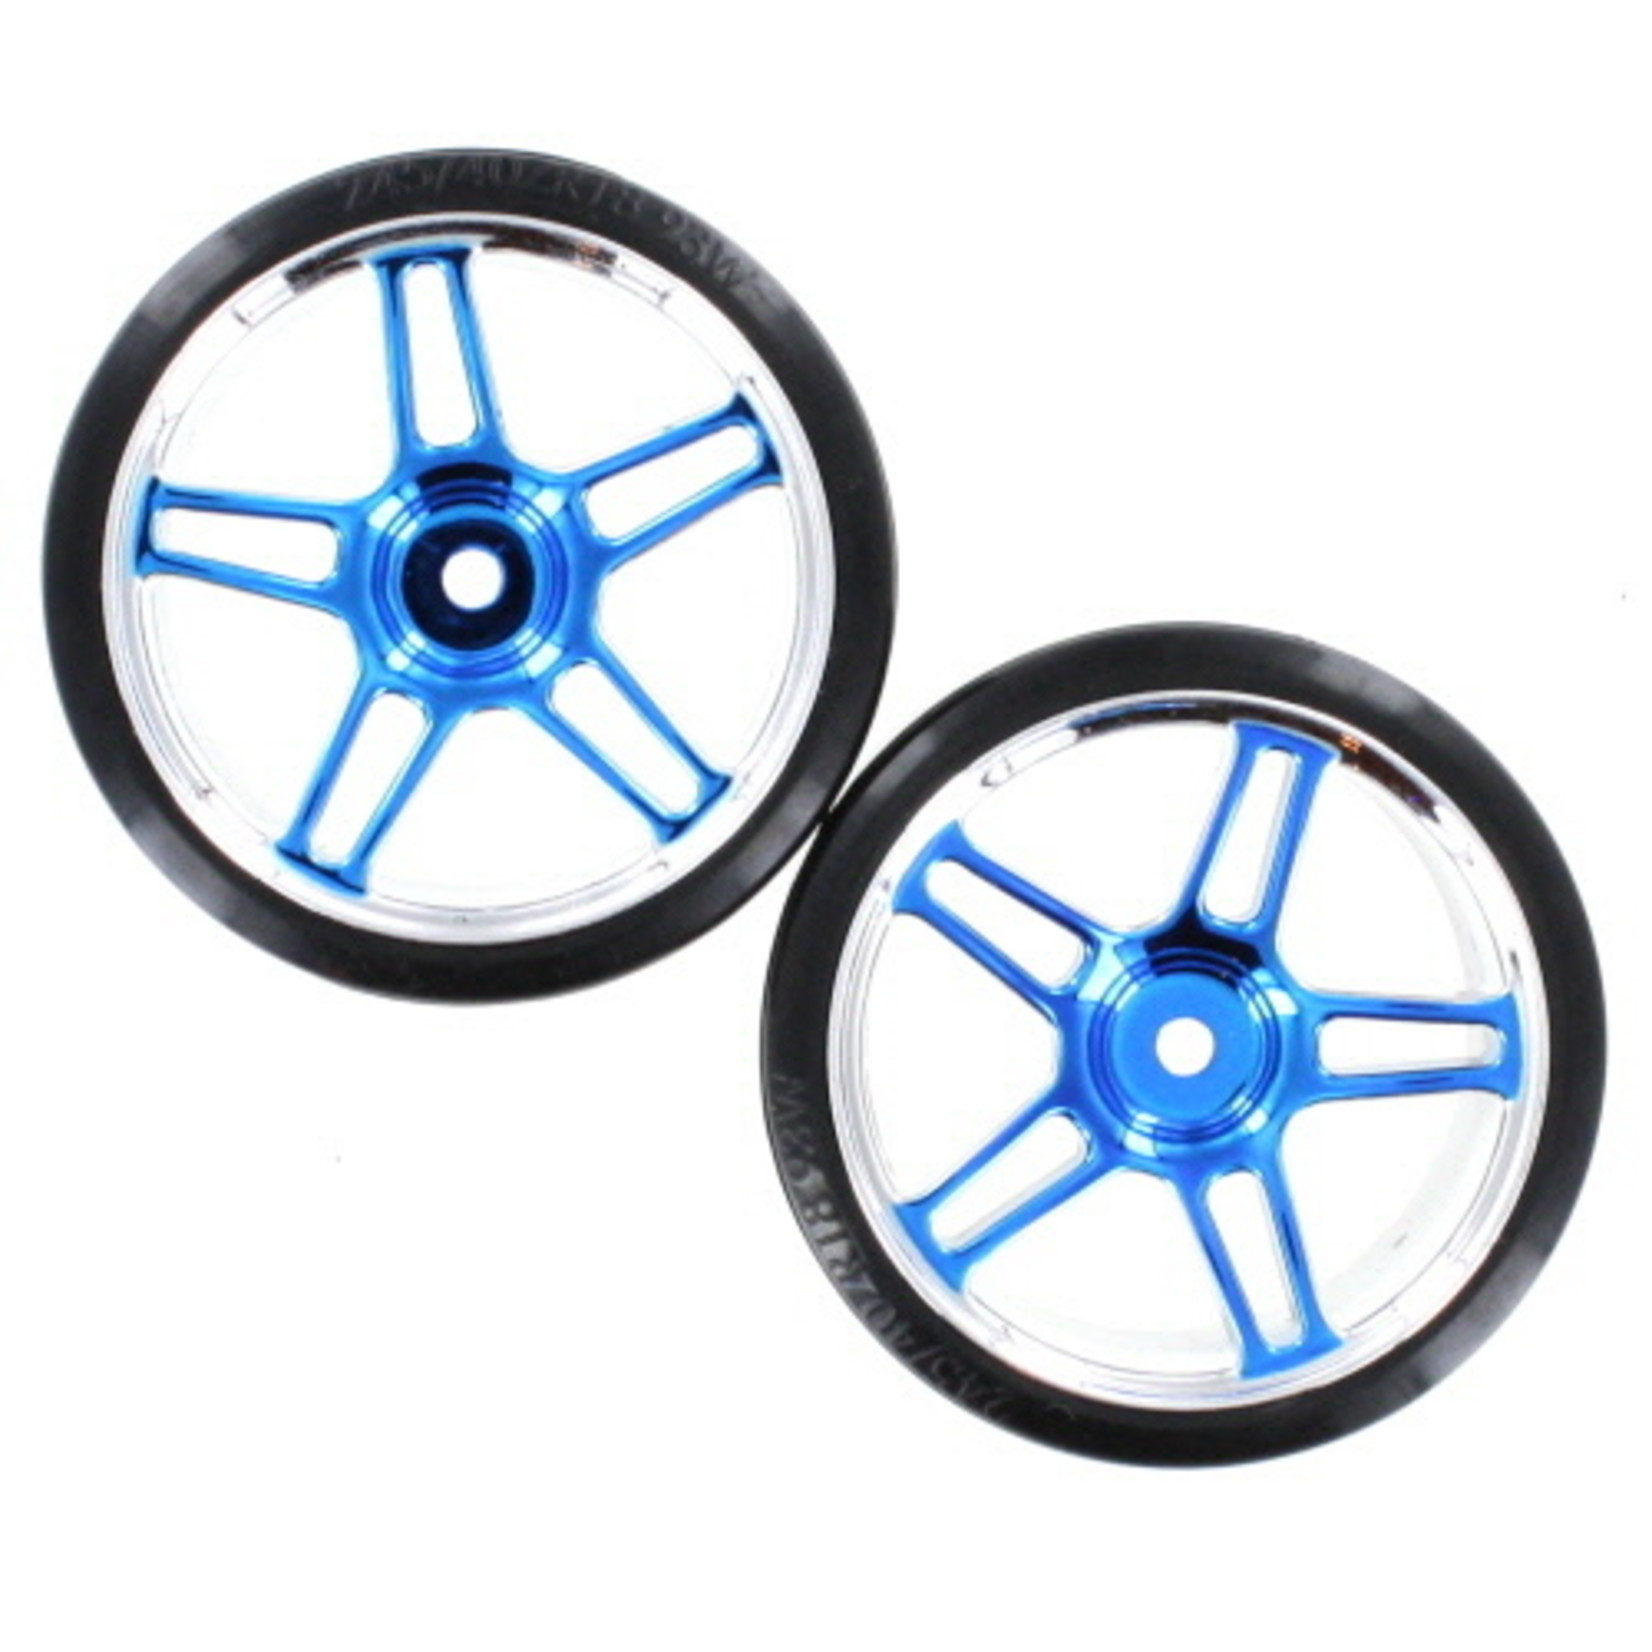 Redcat Racing RER02844  07003b  Chrome & blue 5 split spoke wheels w/ drift tires (2pcs)(plastic)